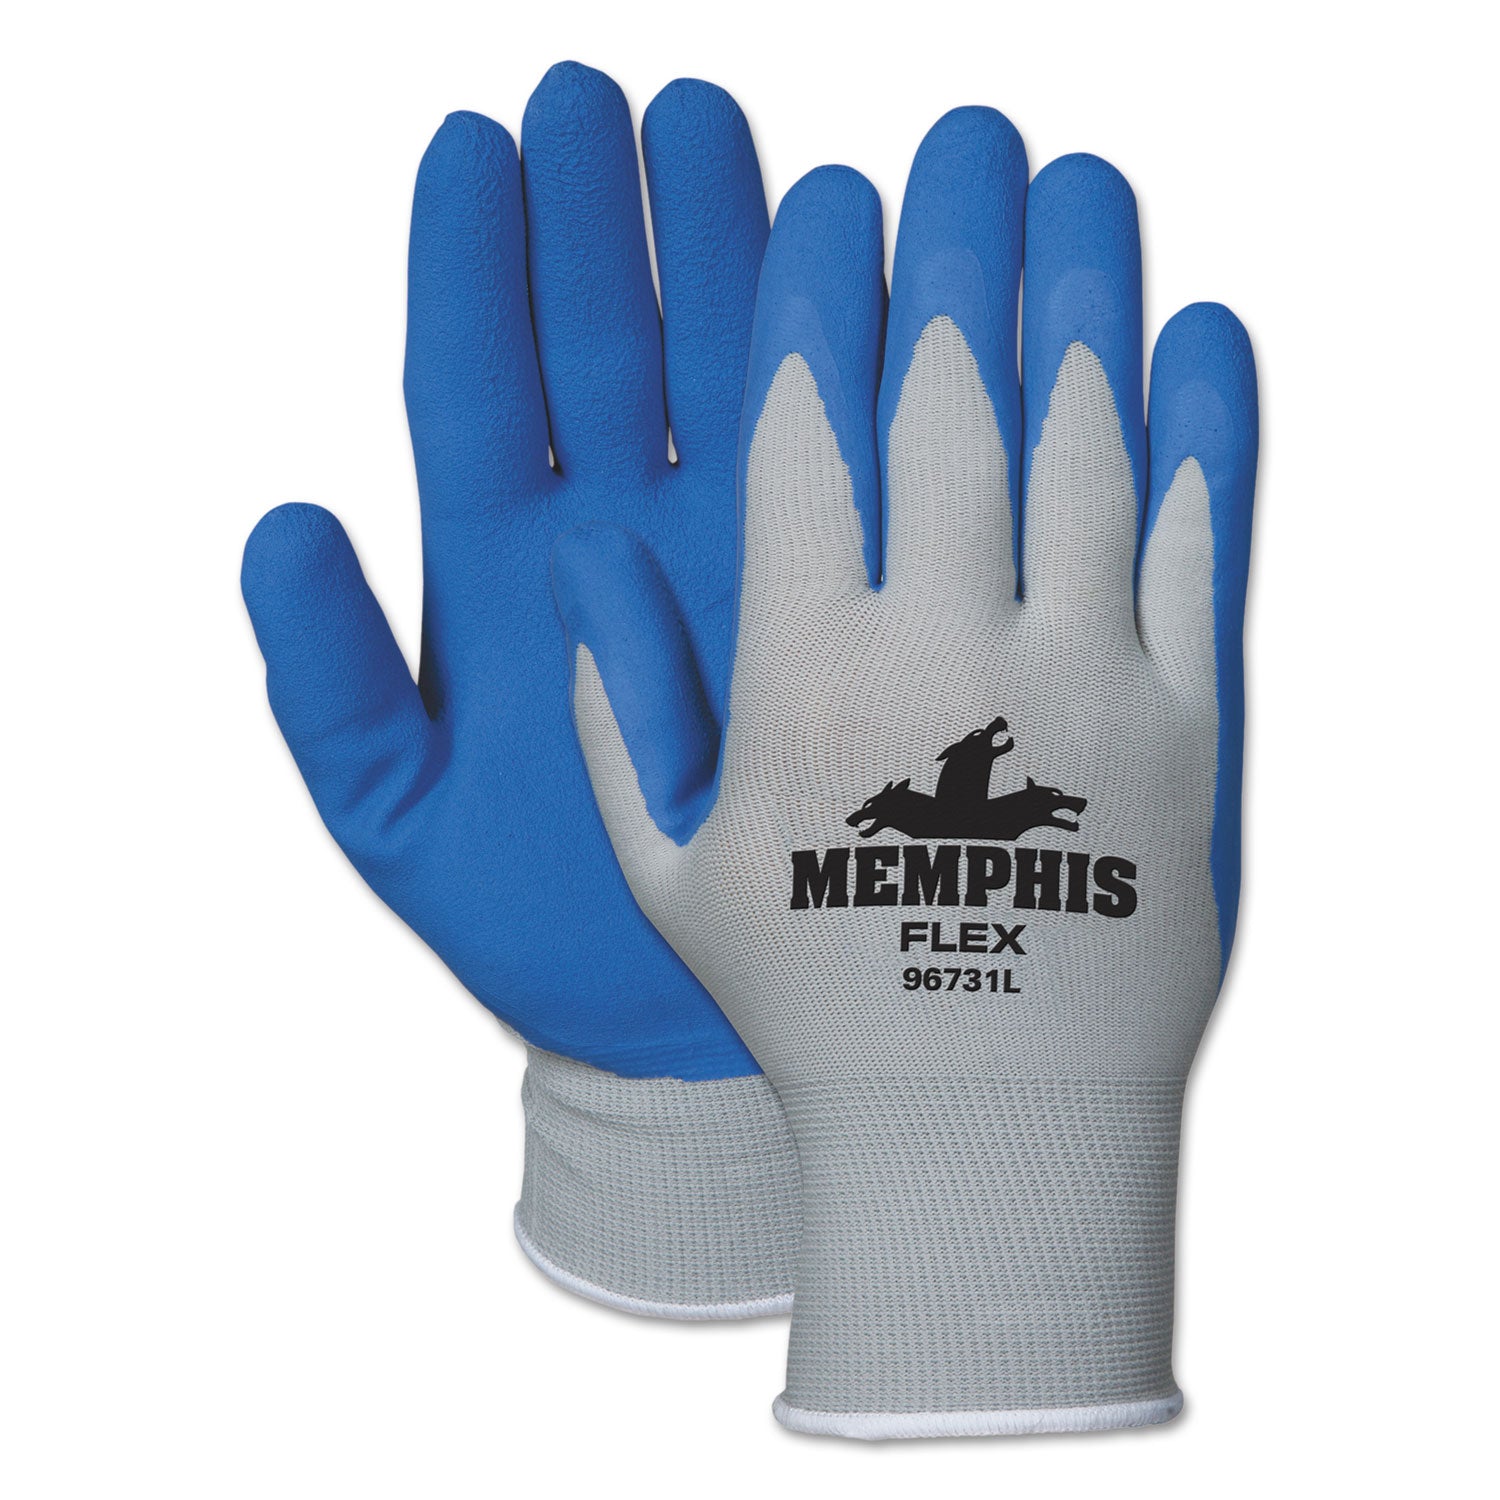 Memphis Flex Seamless Nylon Knit Gloves, Medium, Blue/Gray, Pair - 